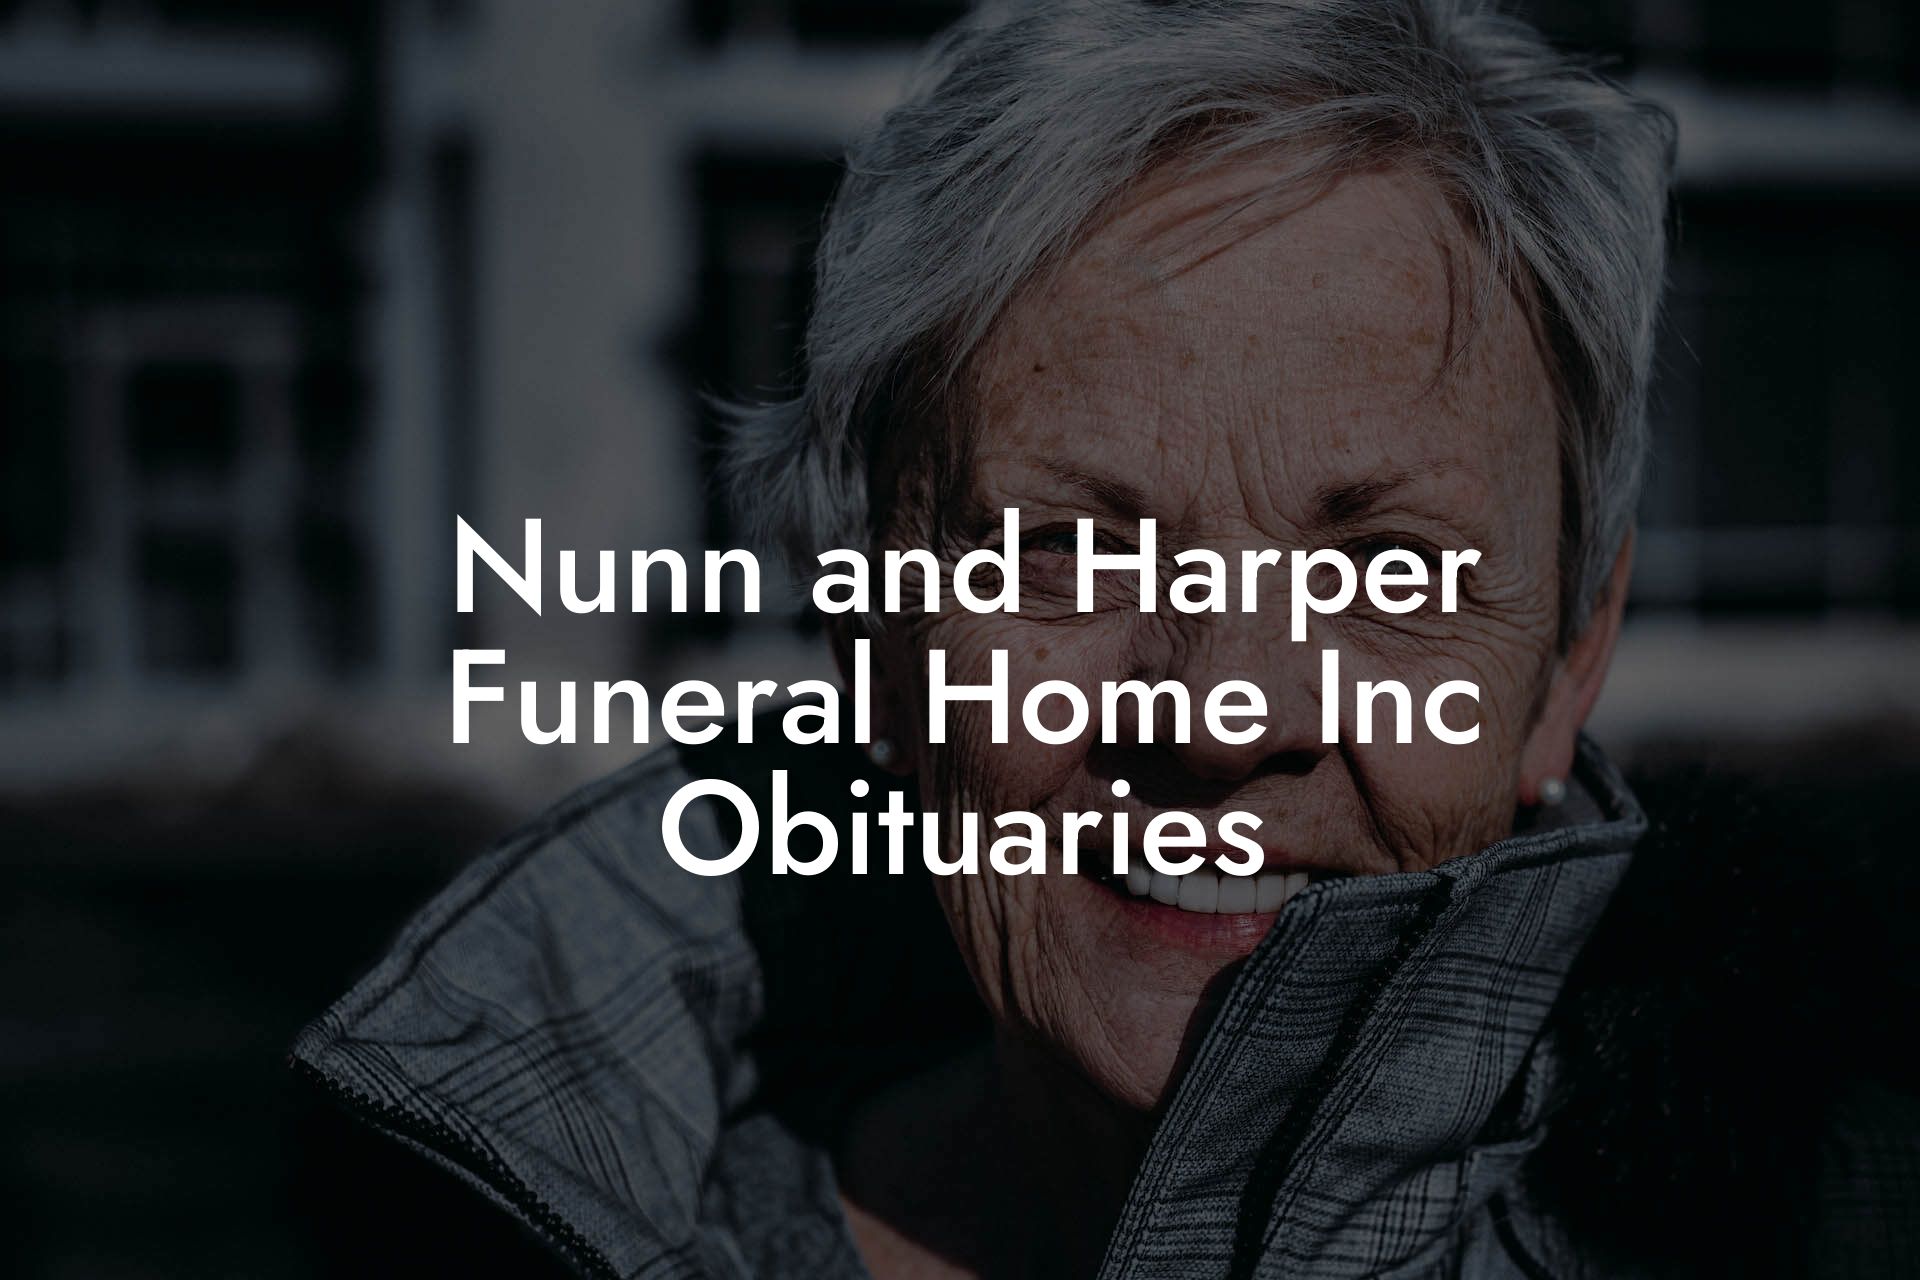 Nunn and Harper Funeral Home Inc Obituaries